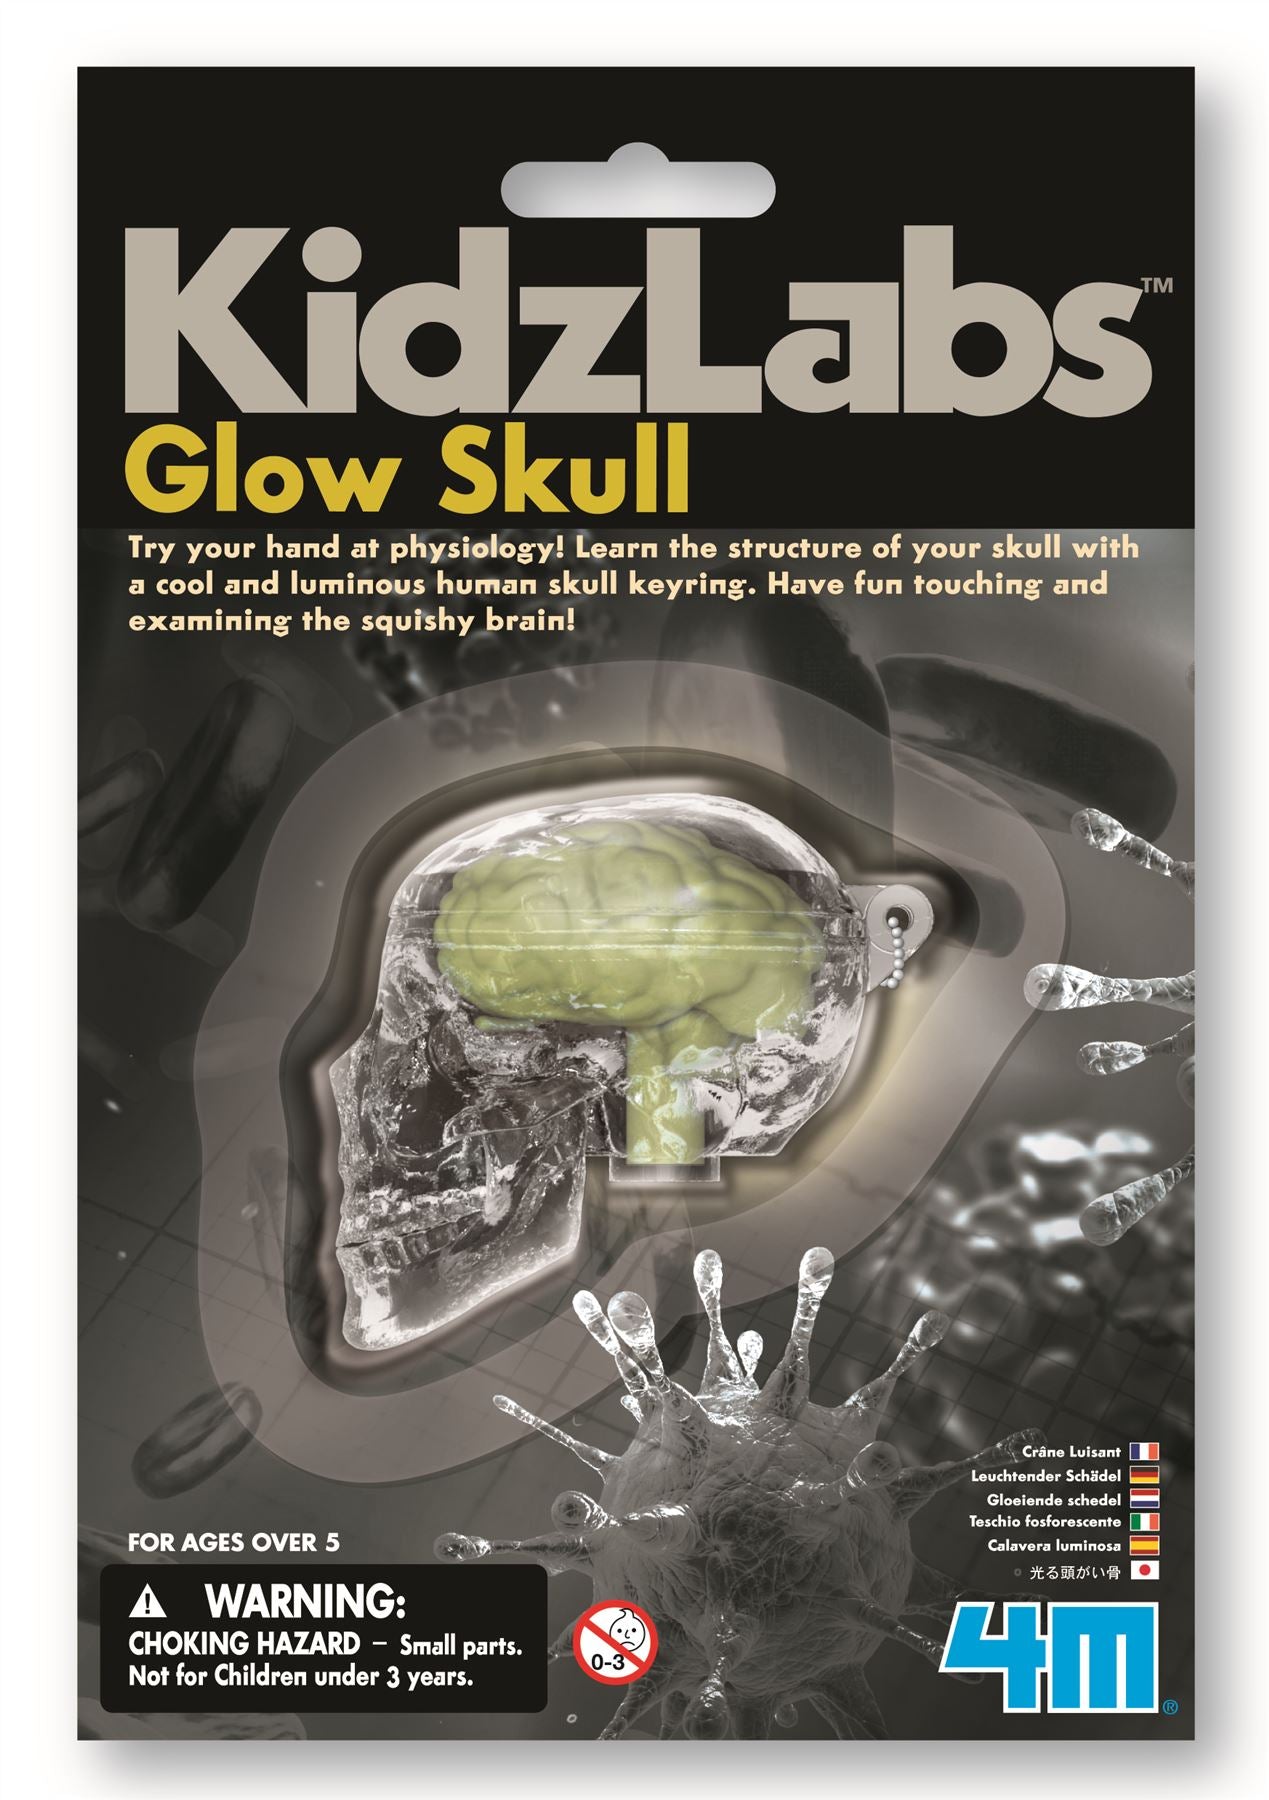 Great Gizmos 4M KidzLabs Glow Skull